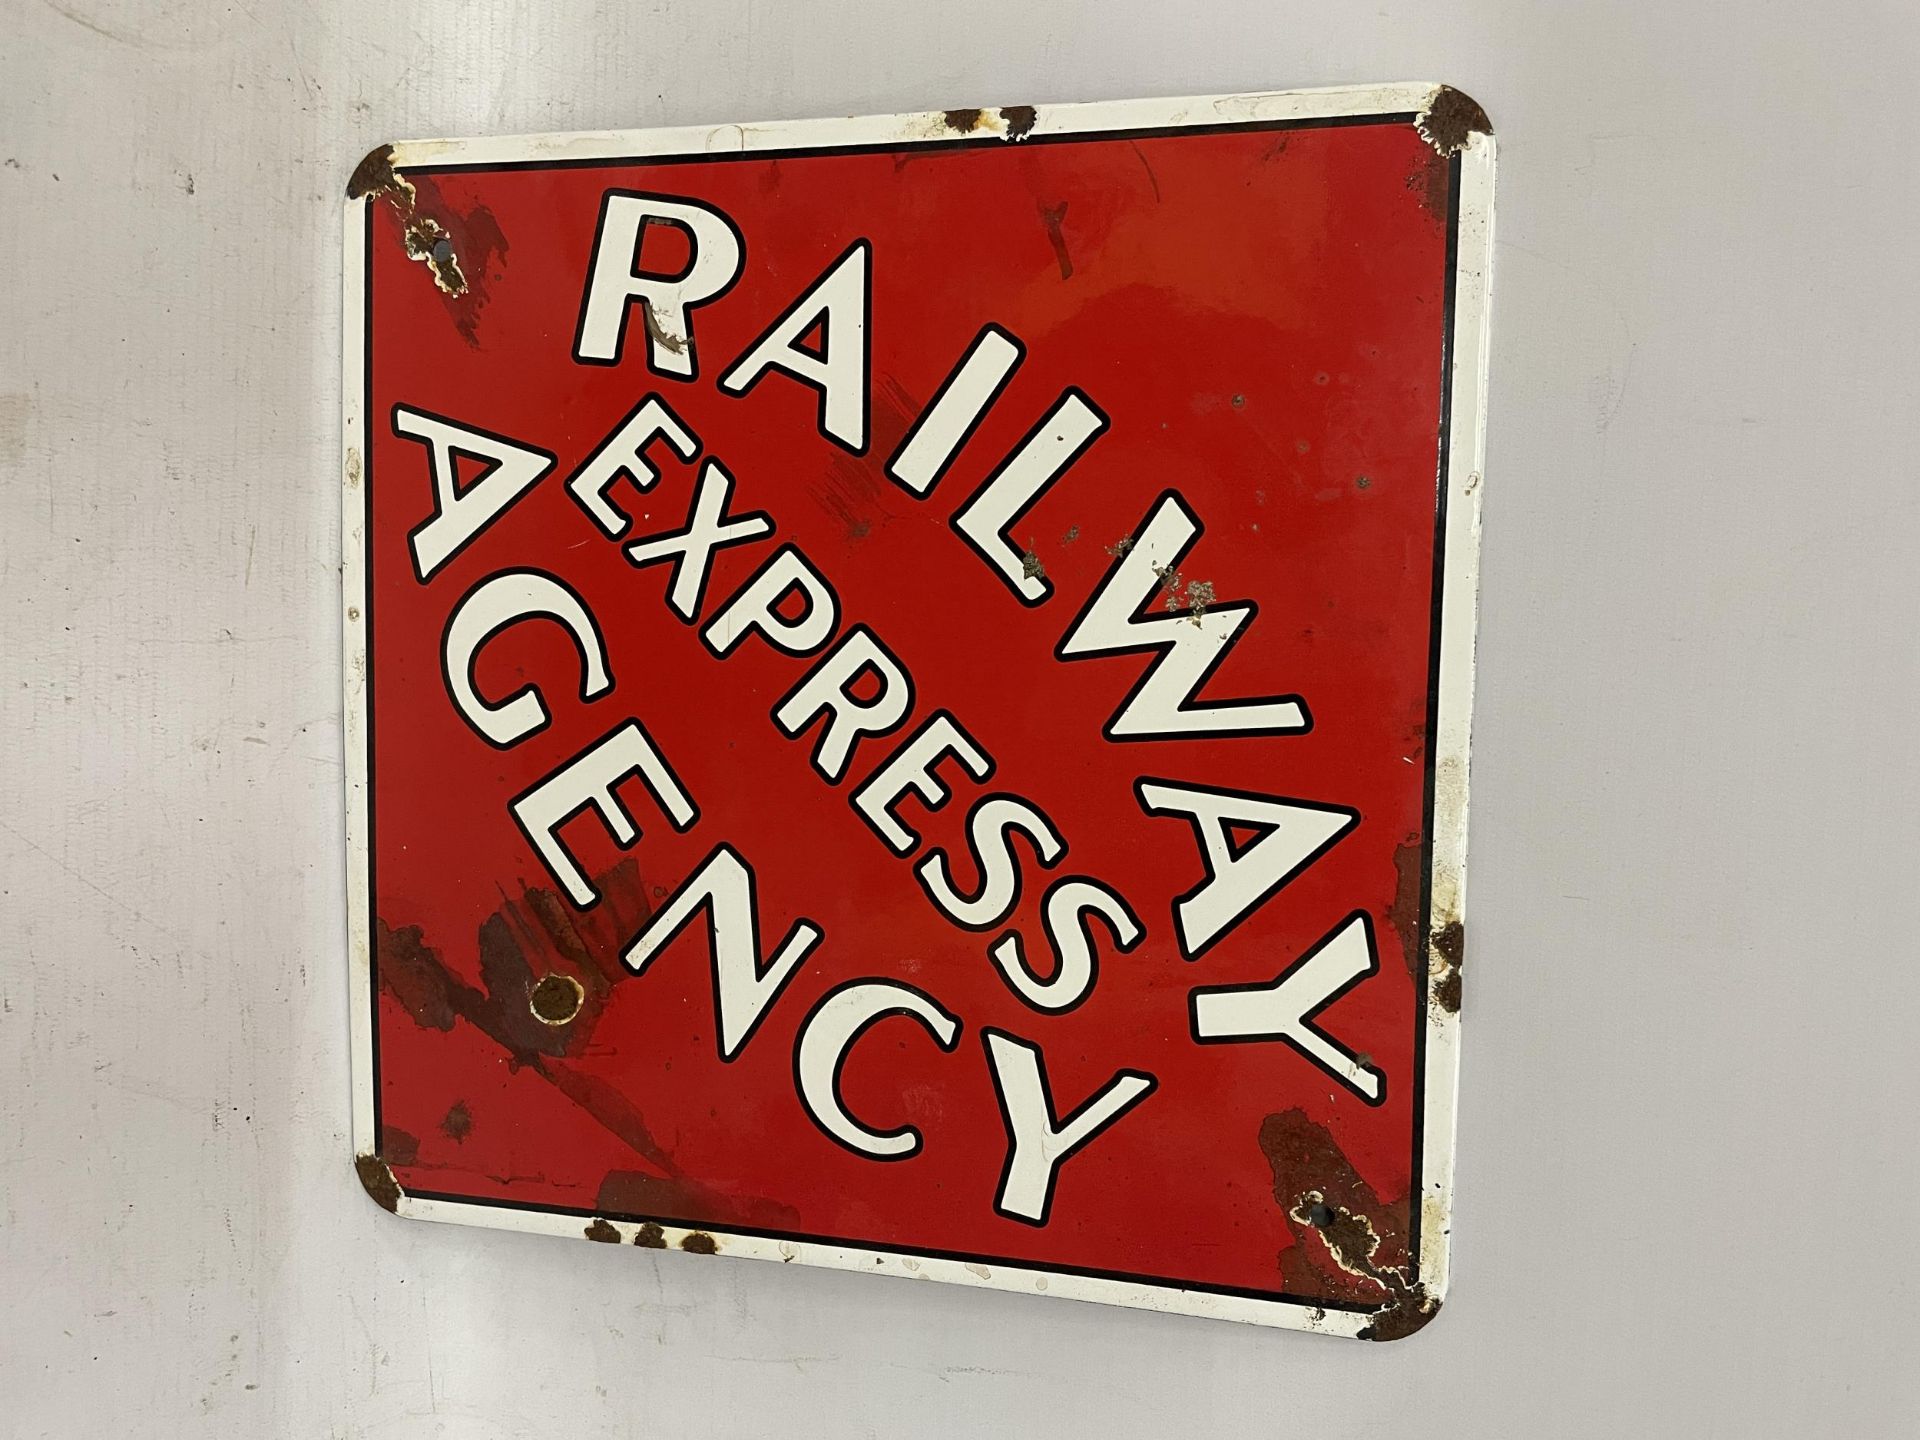 AN ENAMEL RAILWAY EXPRESS AGENCY SIGN